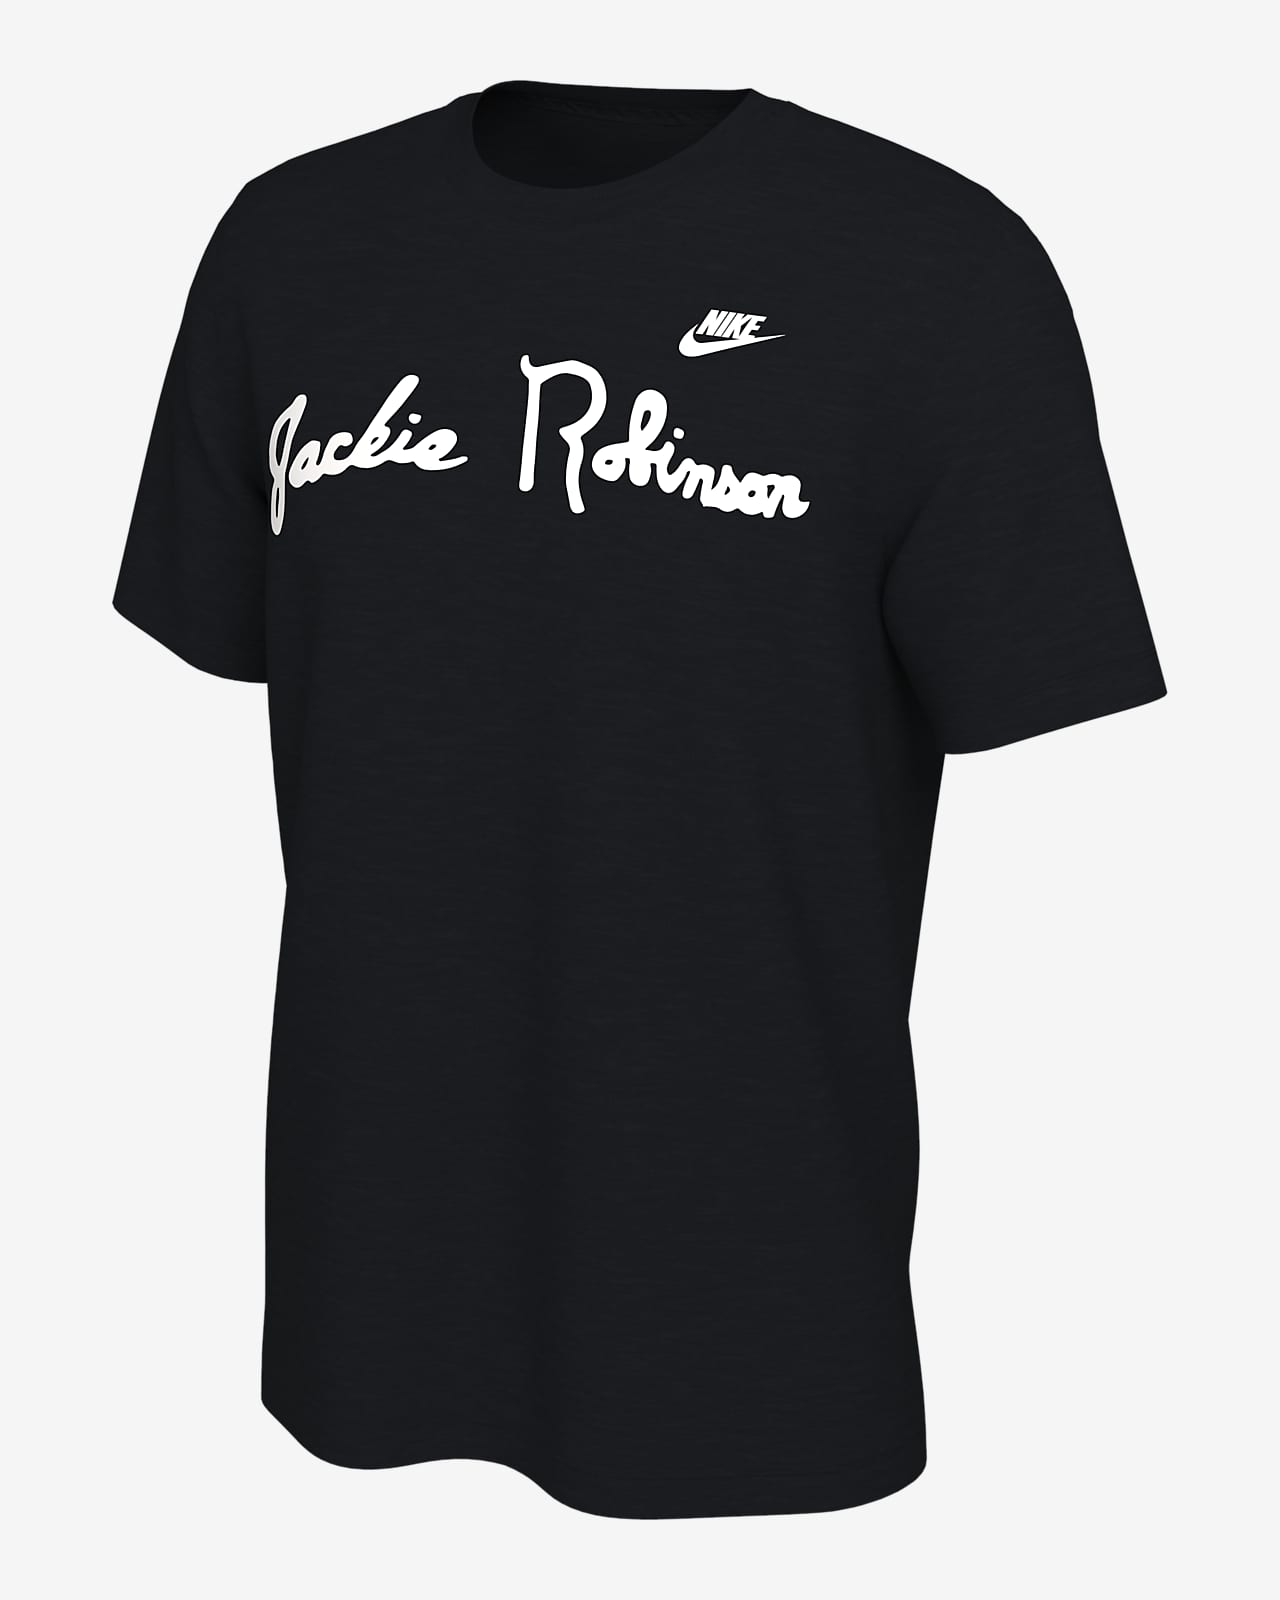 Playera de béisbol Nike Jackie Robinson para hombre